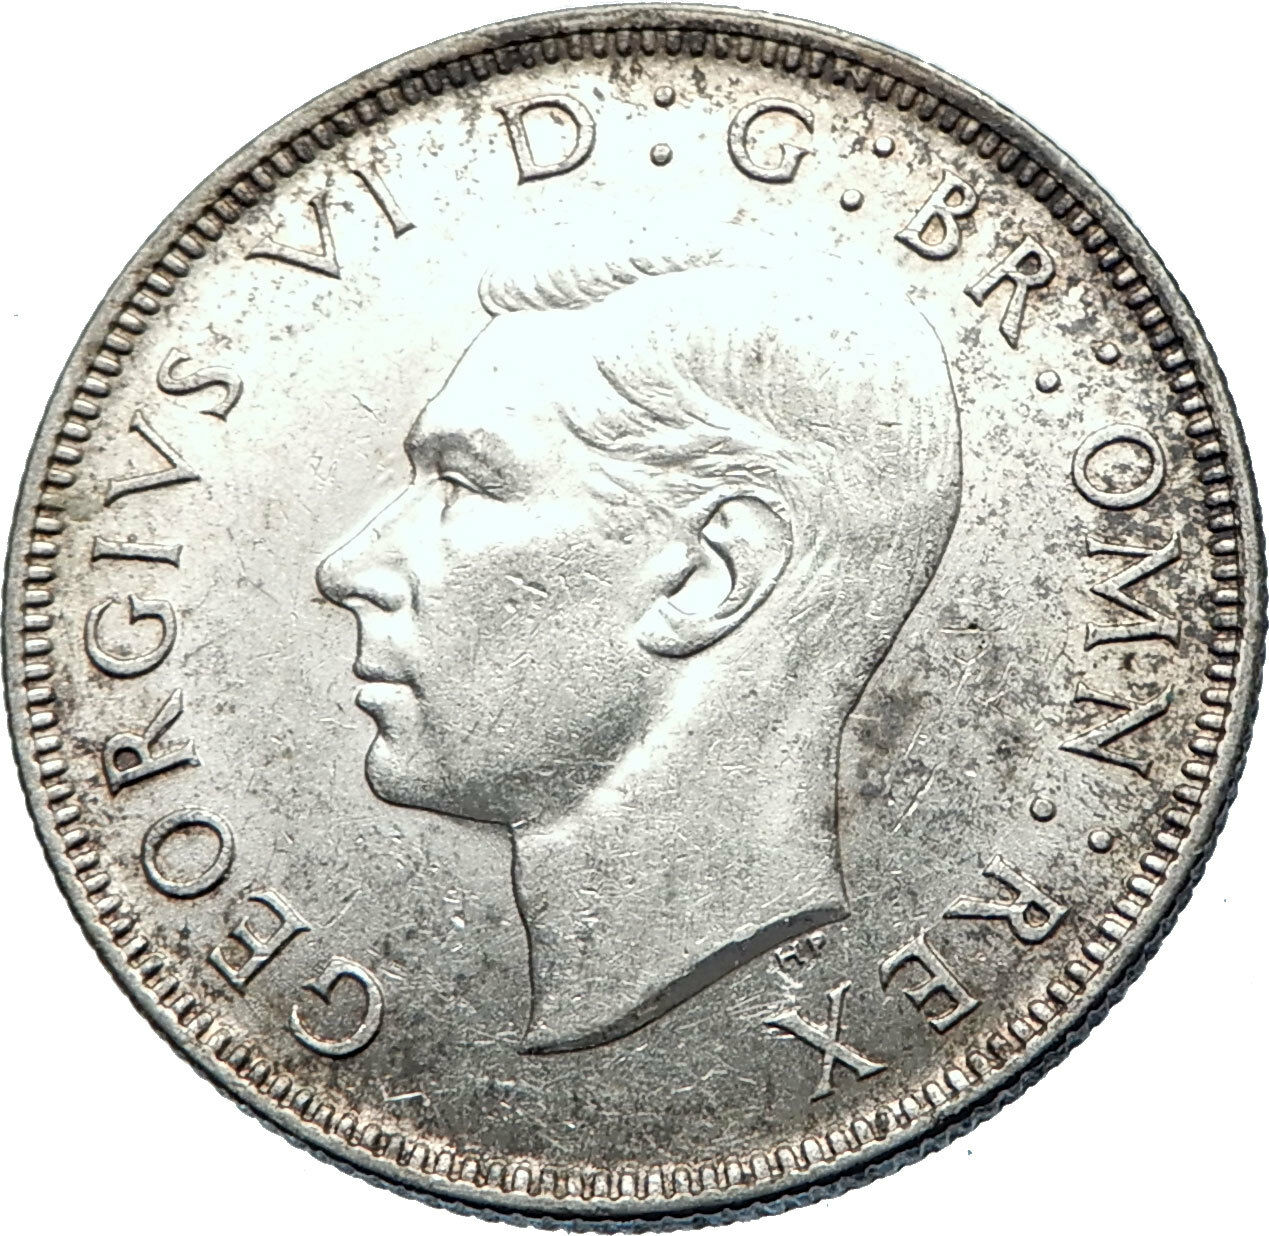 1943 Great Britain UK United Kingdom King George VI SILVER FLORIN Coin i73766